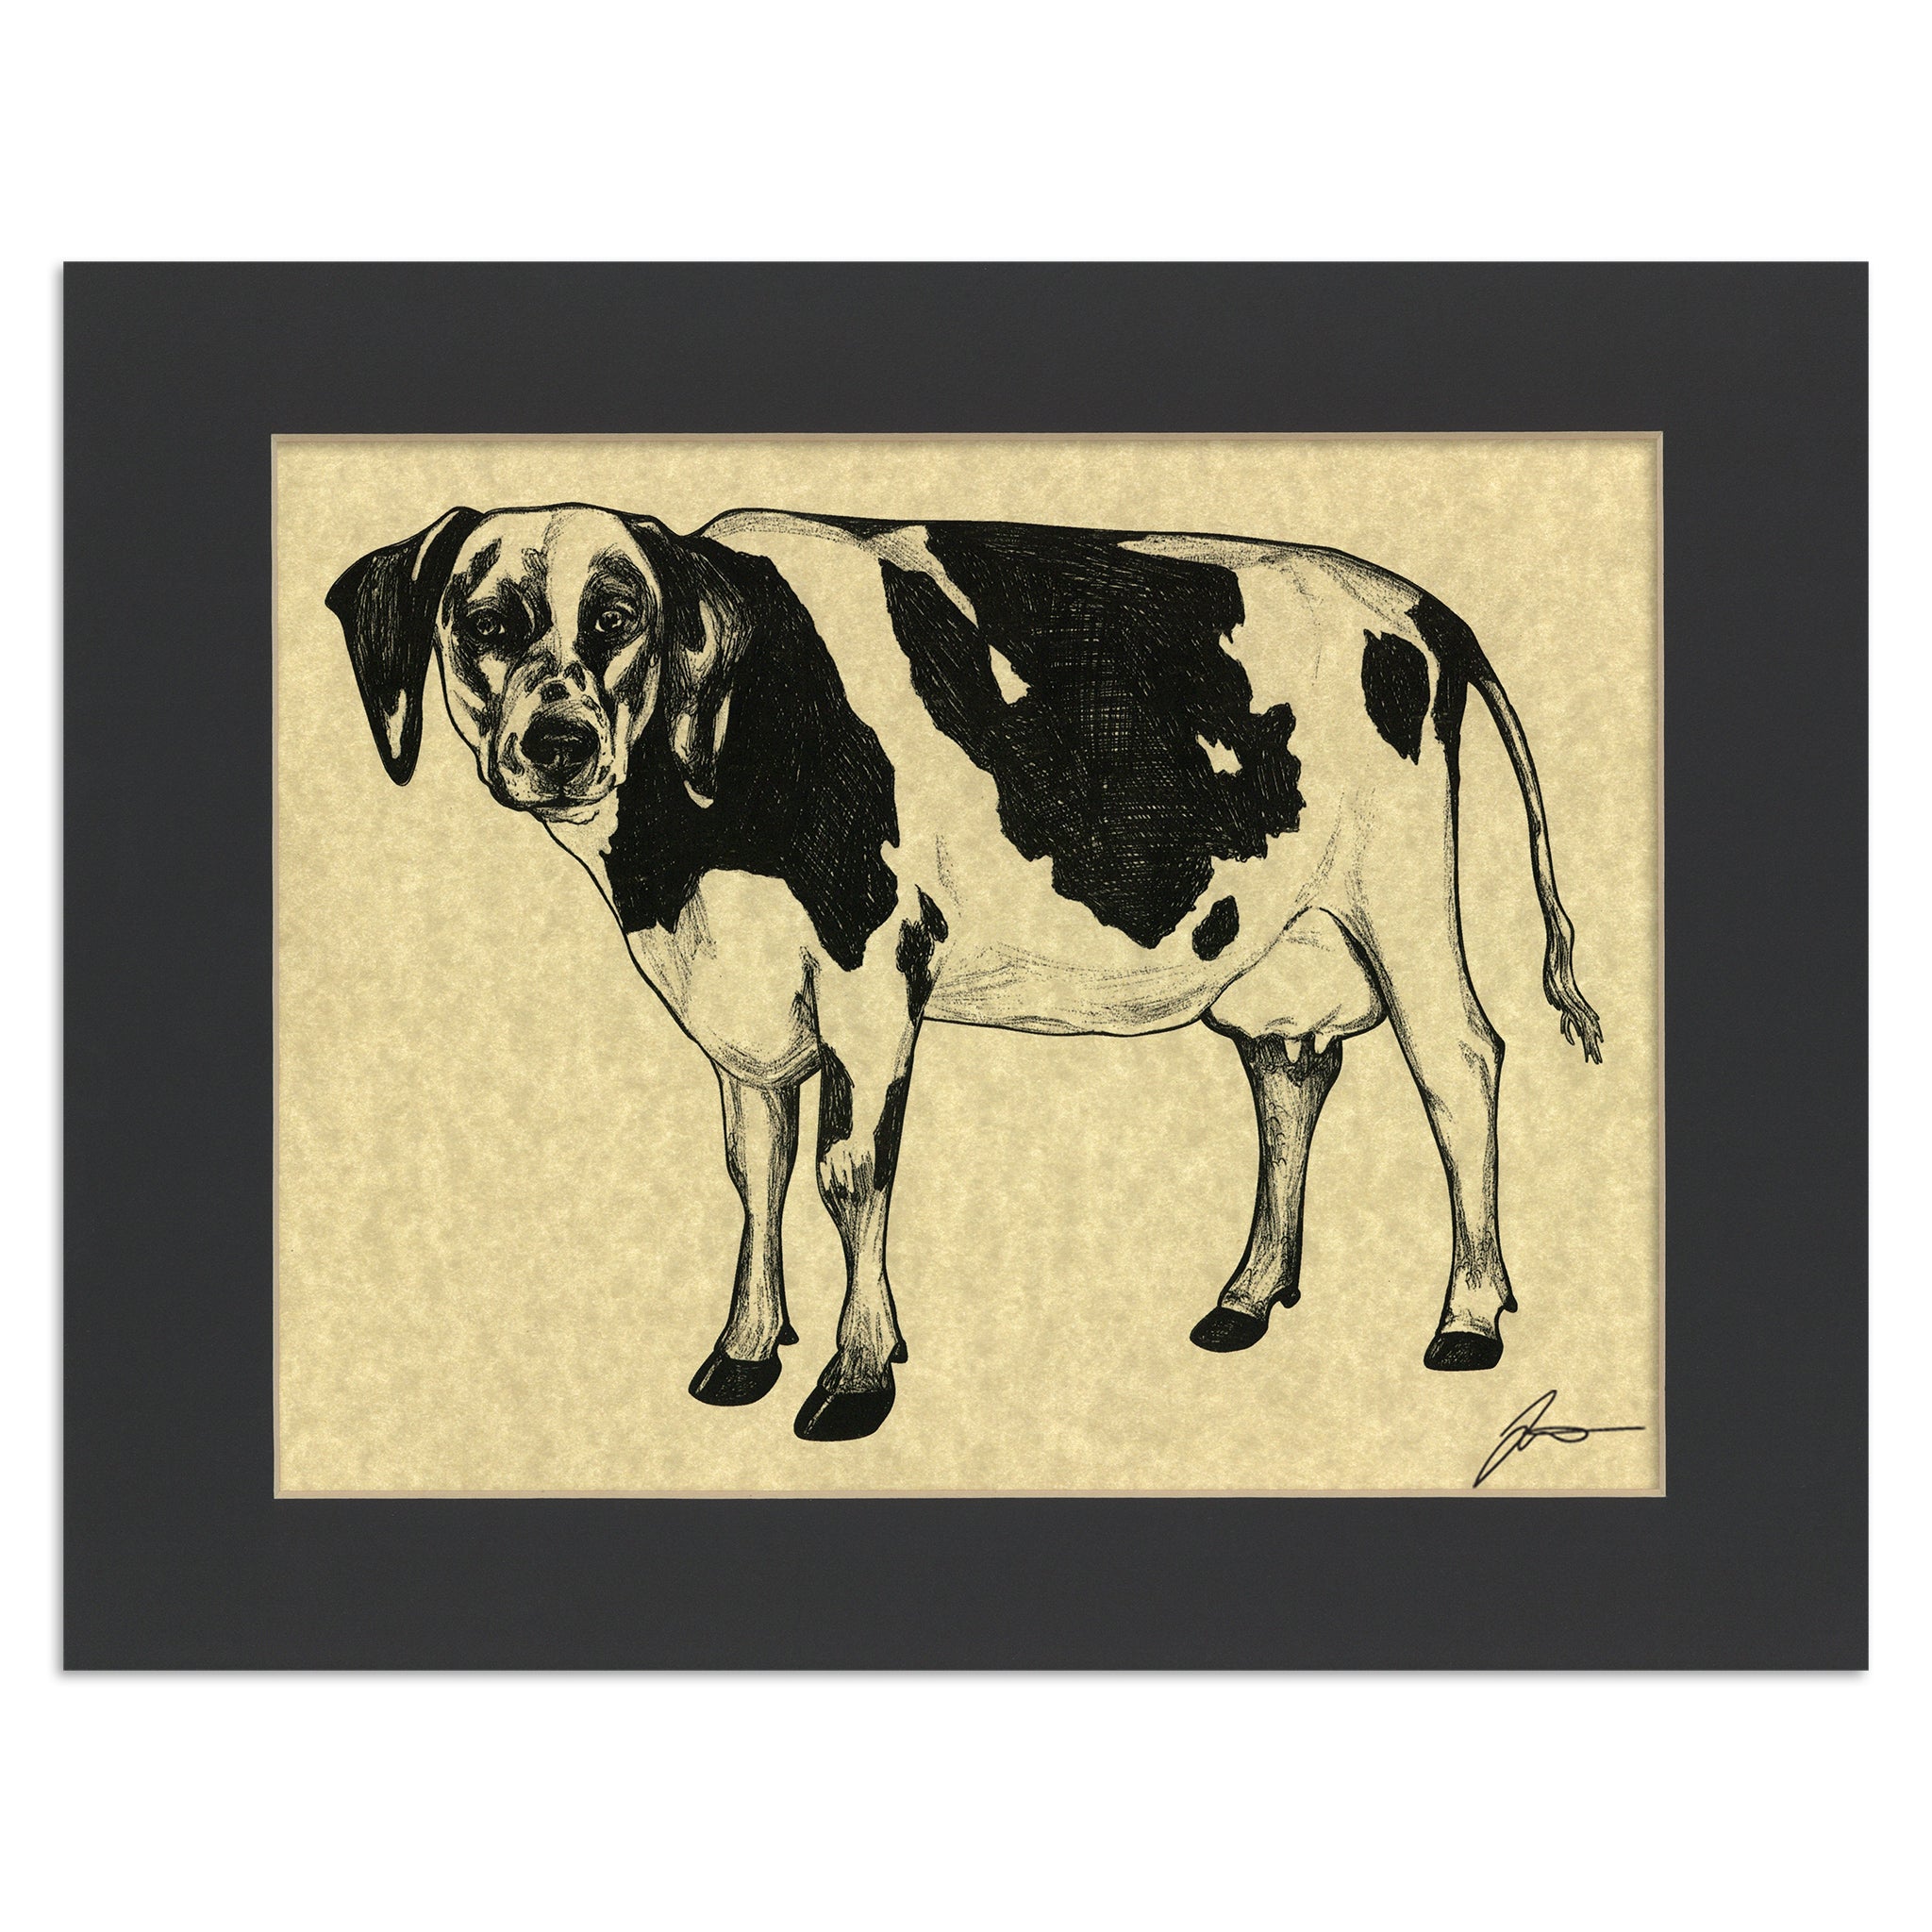 Dalmootion | Dalmatian + Cow Hybrid Animal | 11x14" Parchment Print